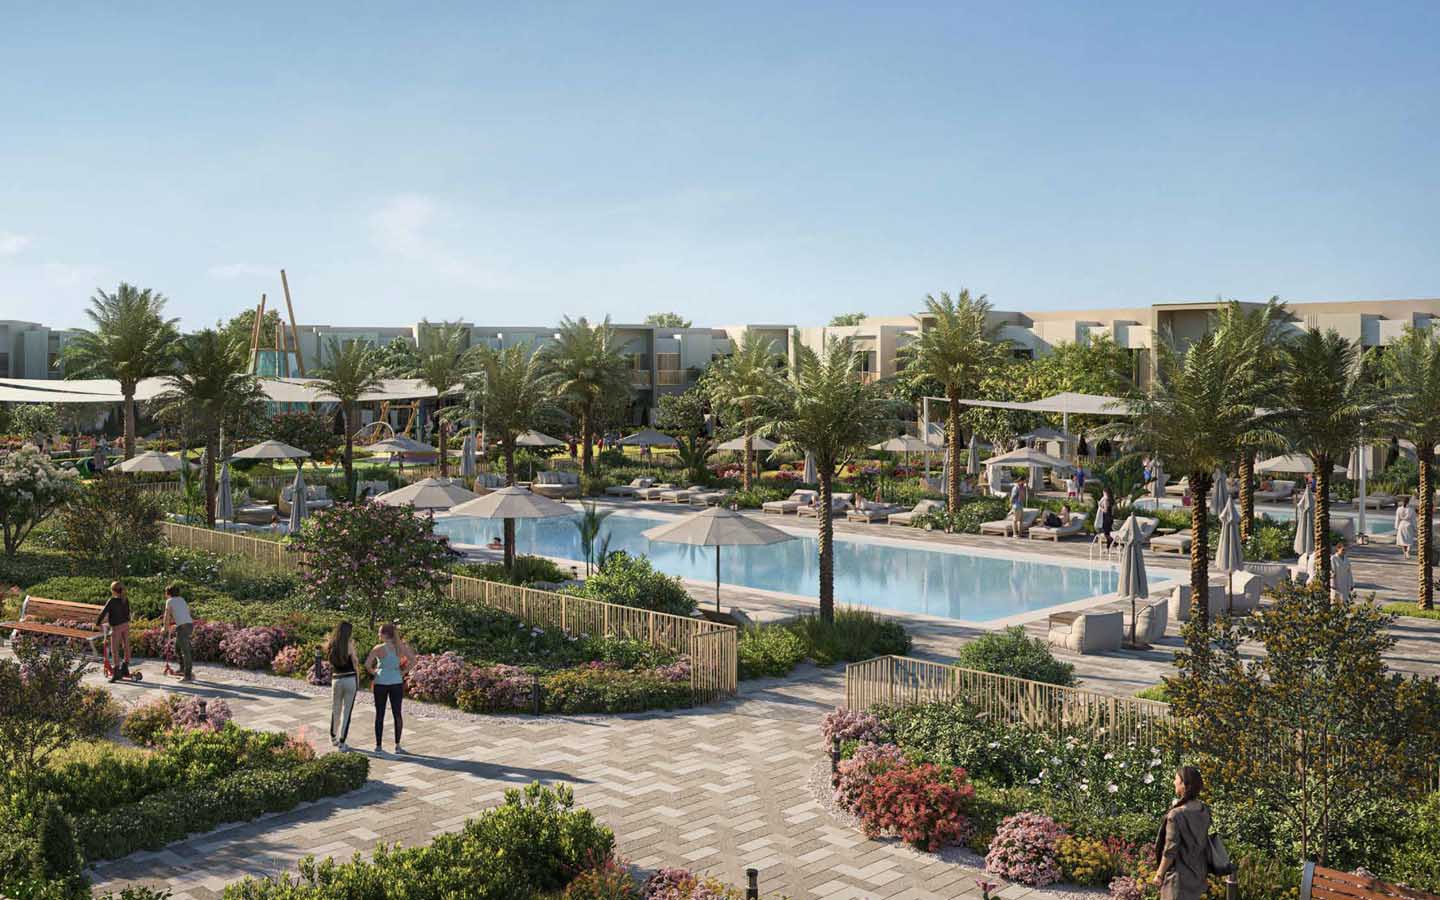 The developer of Villanova is Dubai Properties